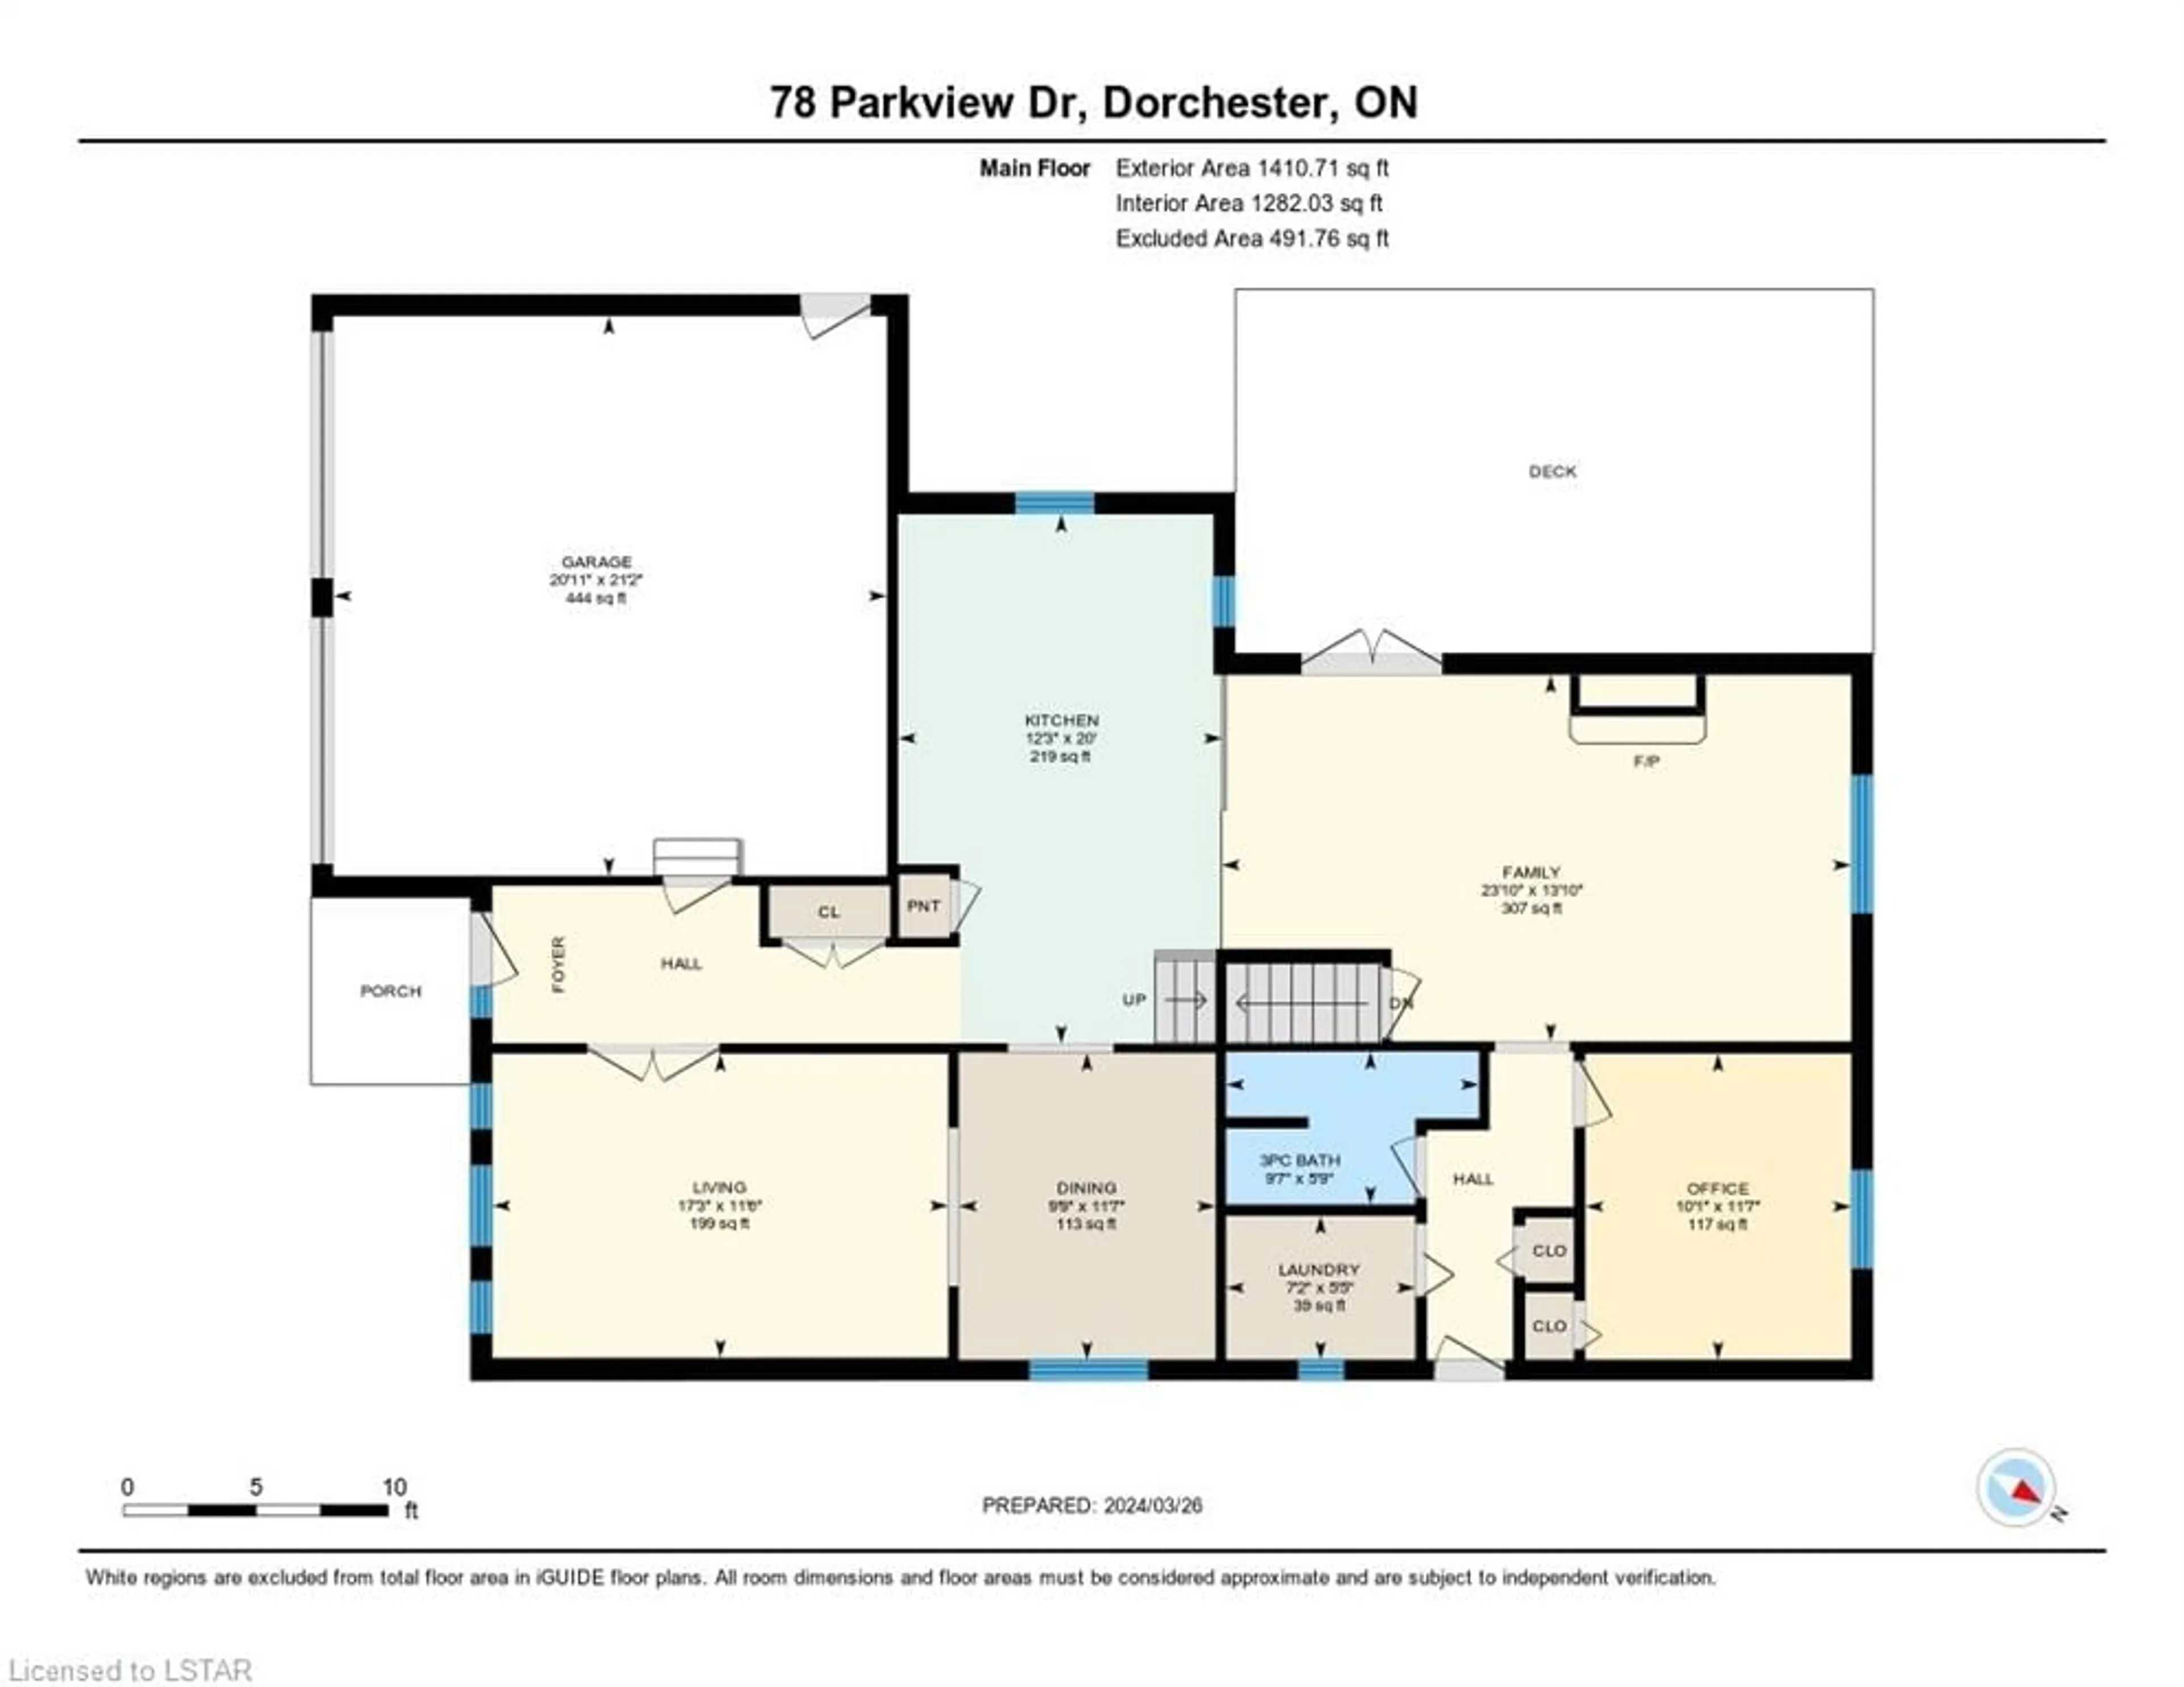 Floor plan for 78 Parkview Dr, Dorchester Ontario N0L 1G2